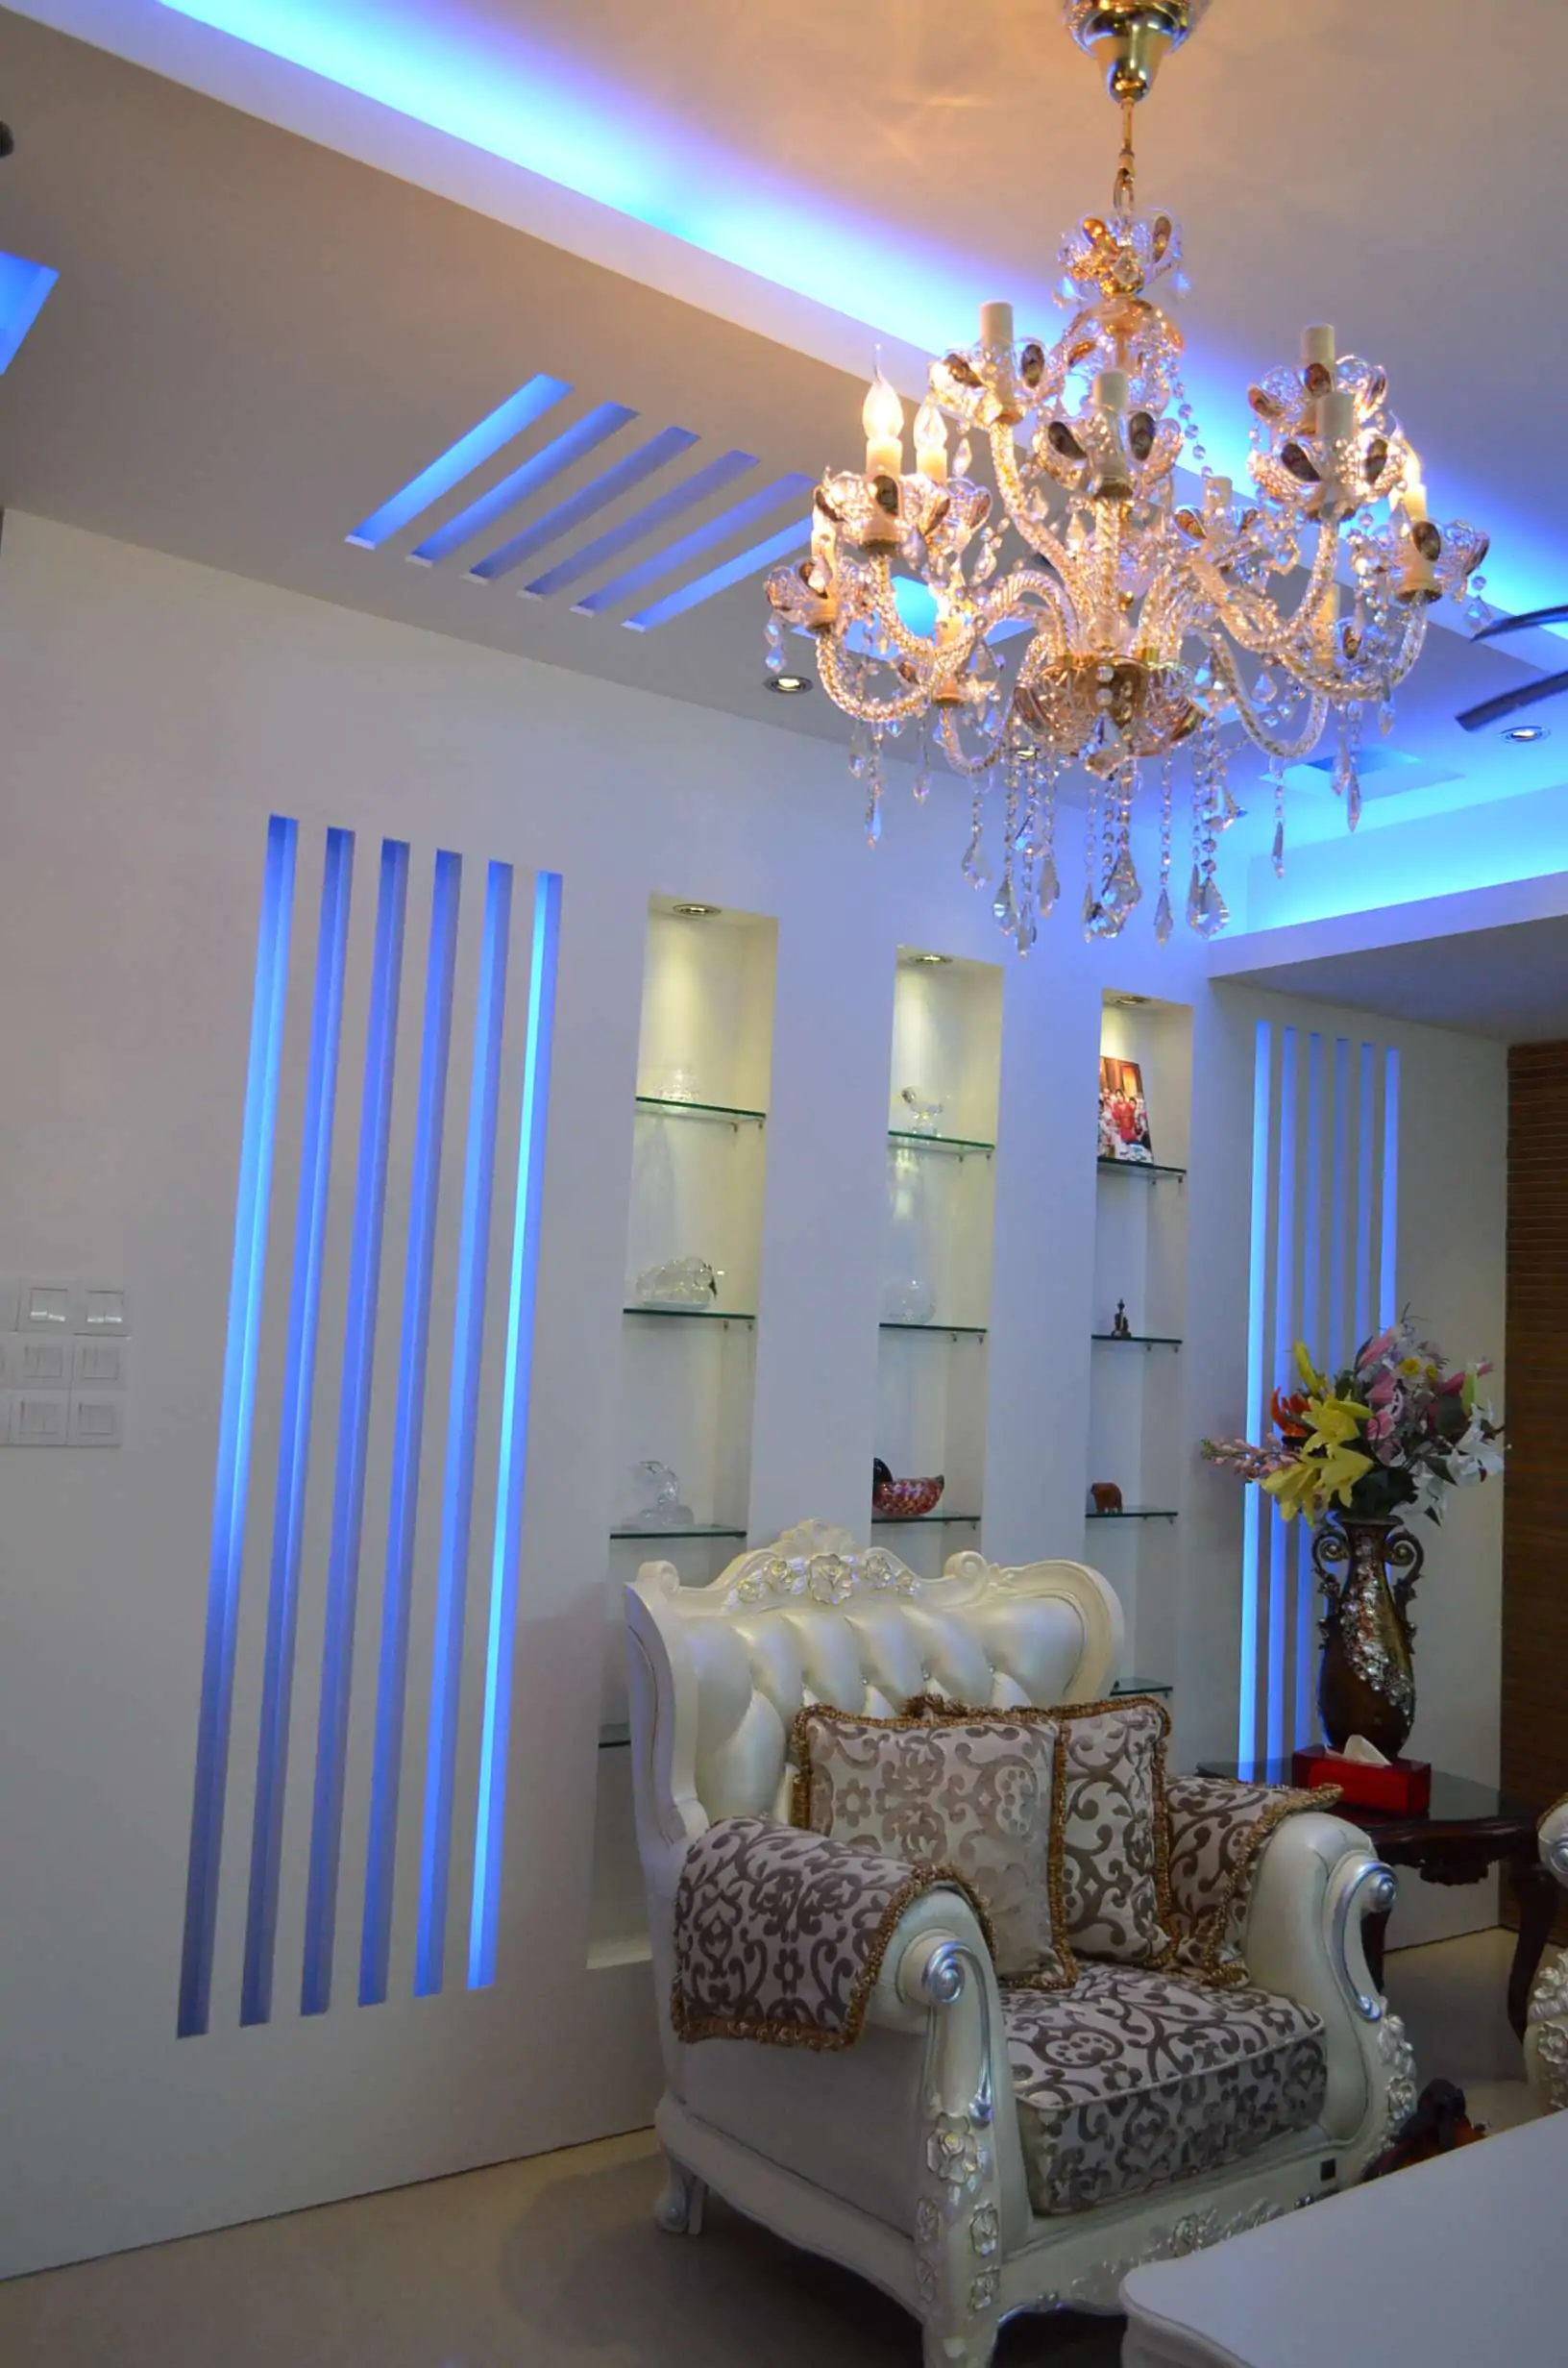 Masud Alam Dhanmondi Complete Project Home Interior Design (19)